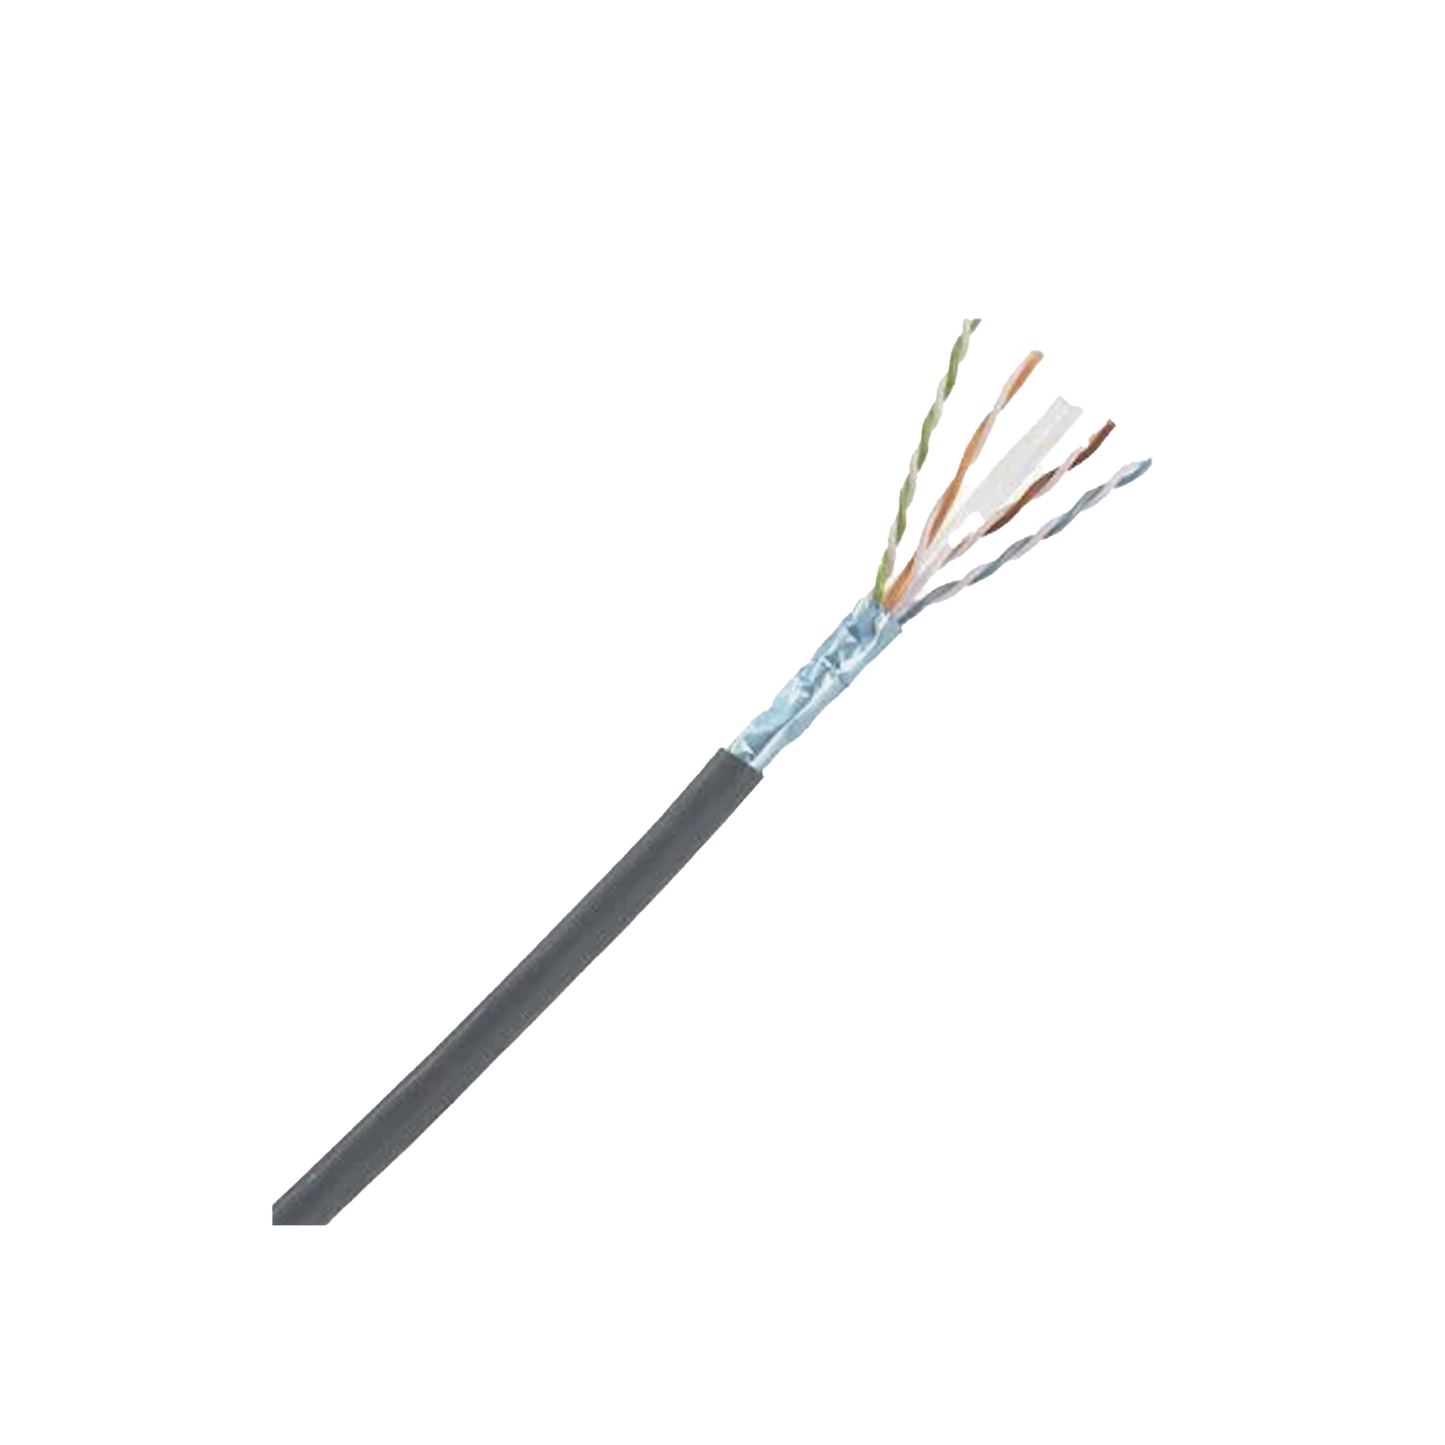 Bobina de Cable Blindado F/UTP de 4 Pares, Cat6A, Soporte de Aplicaciones 10GBase-T, LSZH (Libre de Gases Tóxicos), Color Negro, 305m